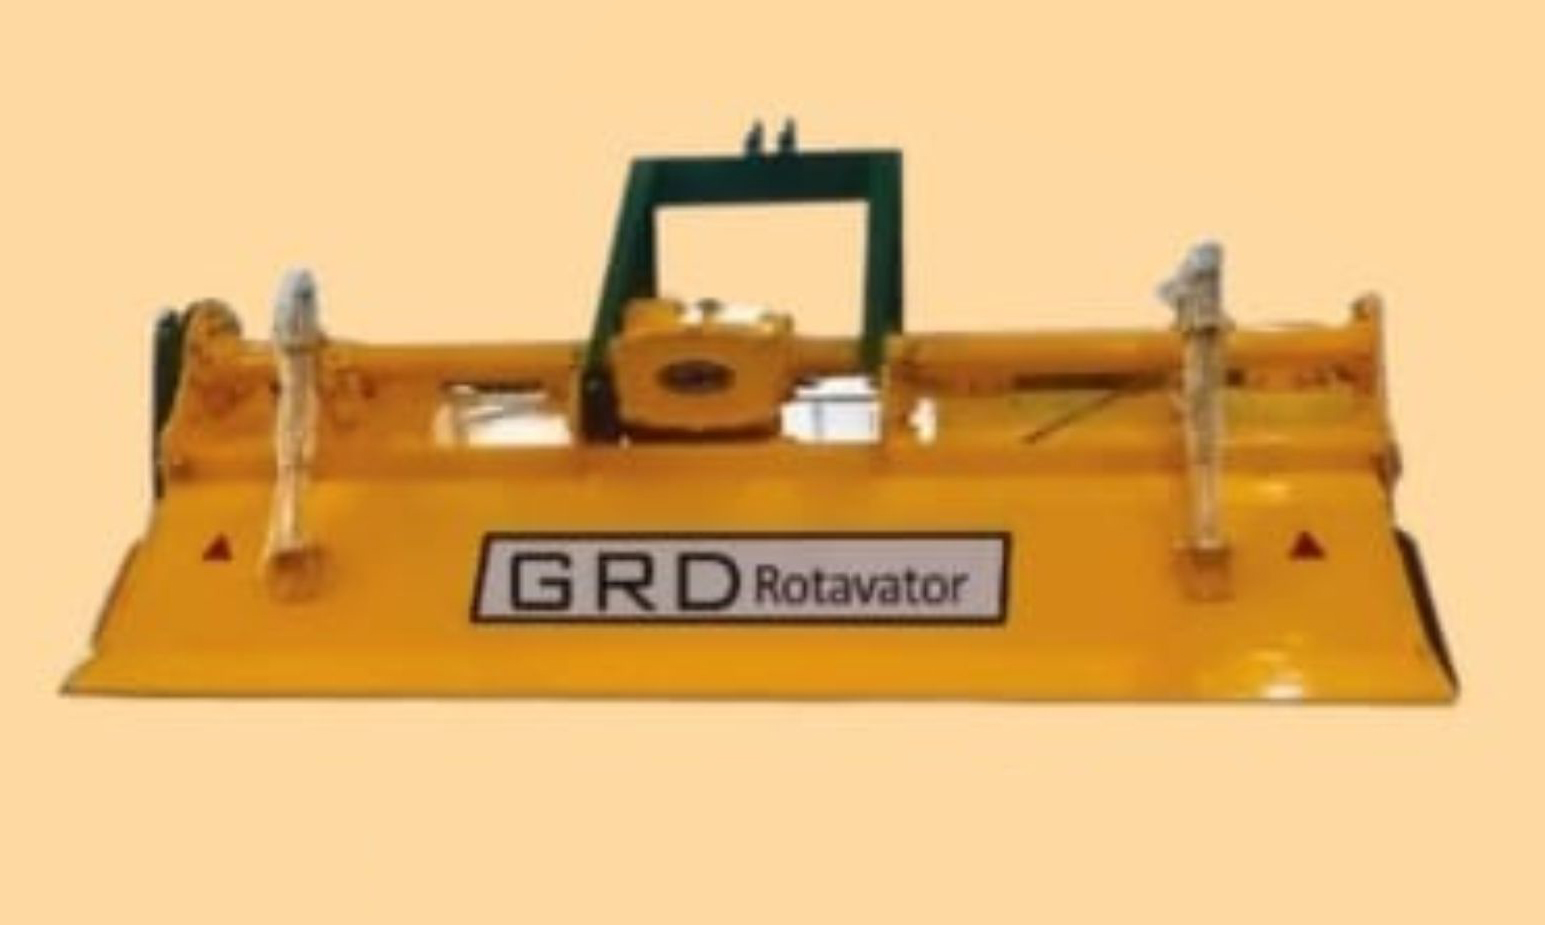 GRD Rotavator